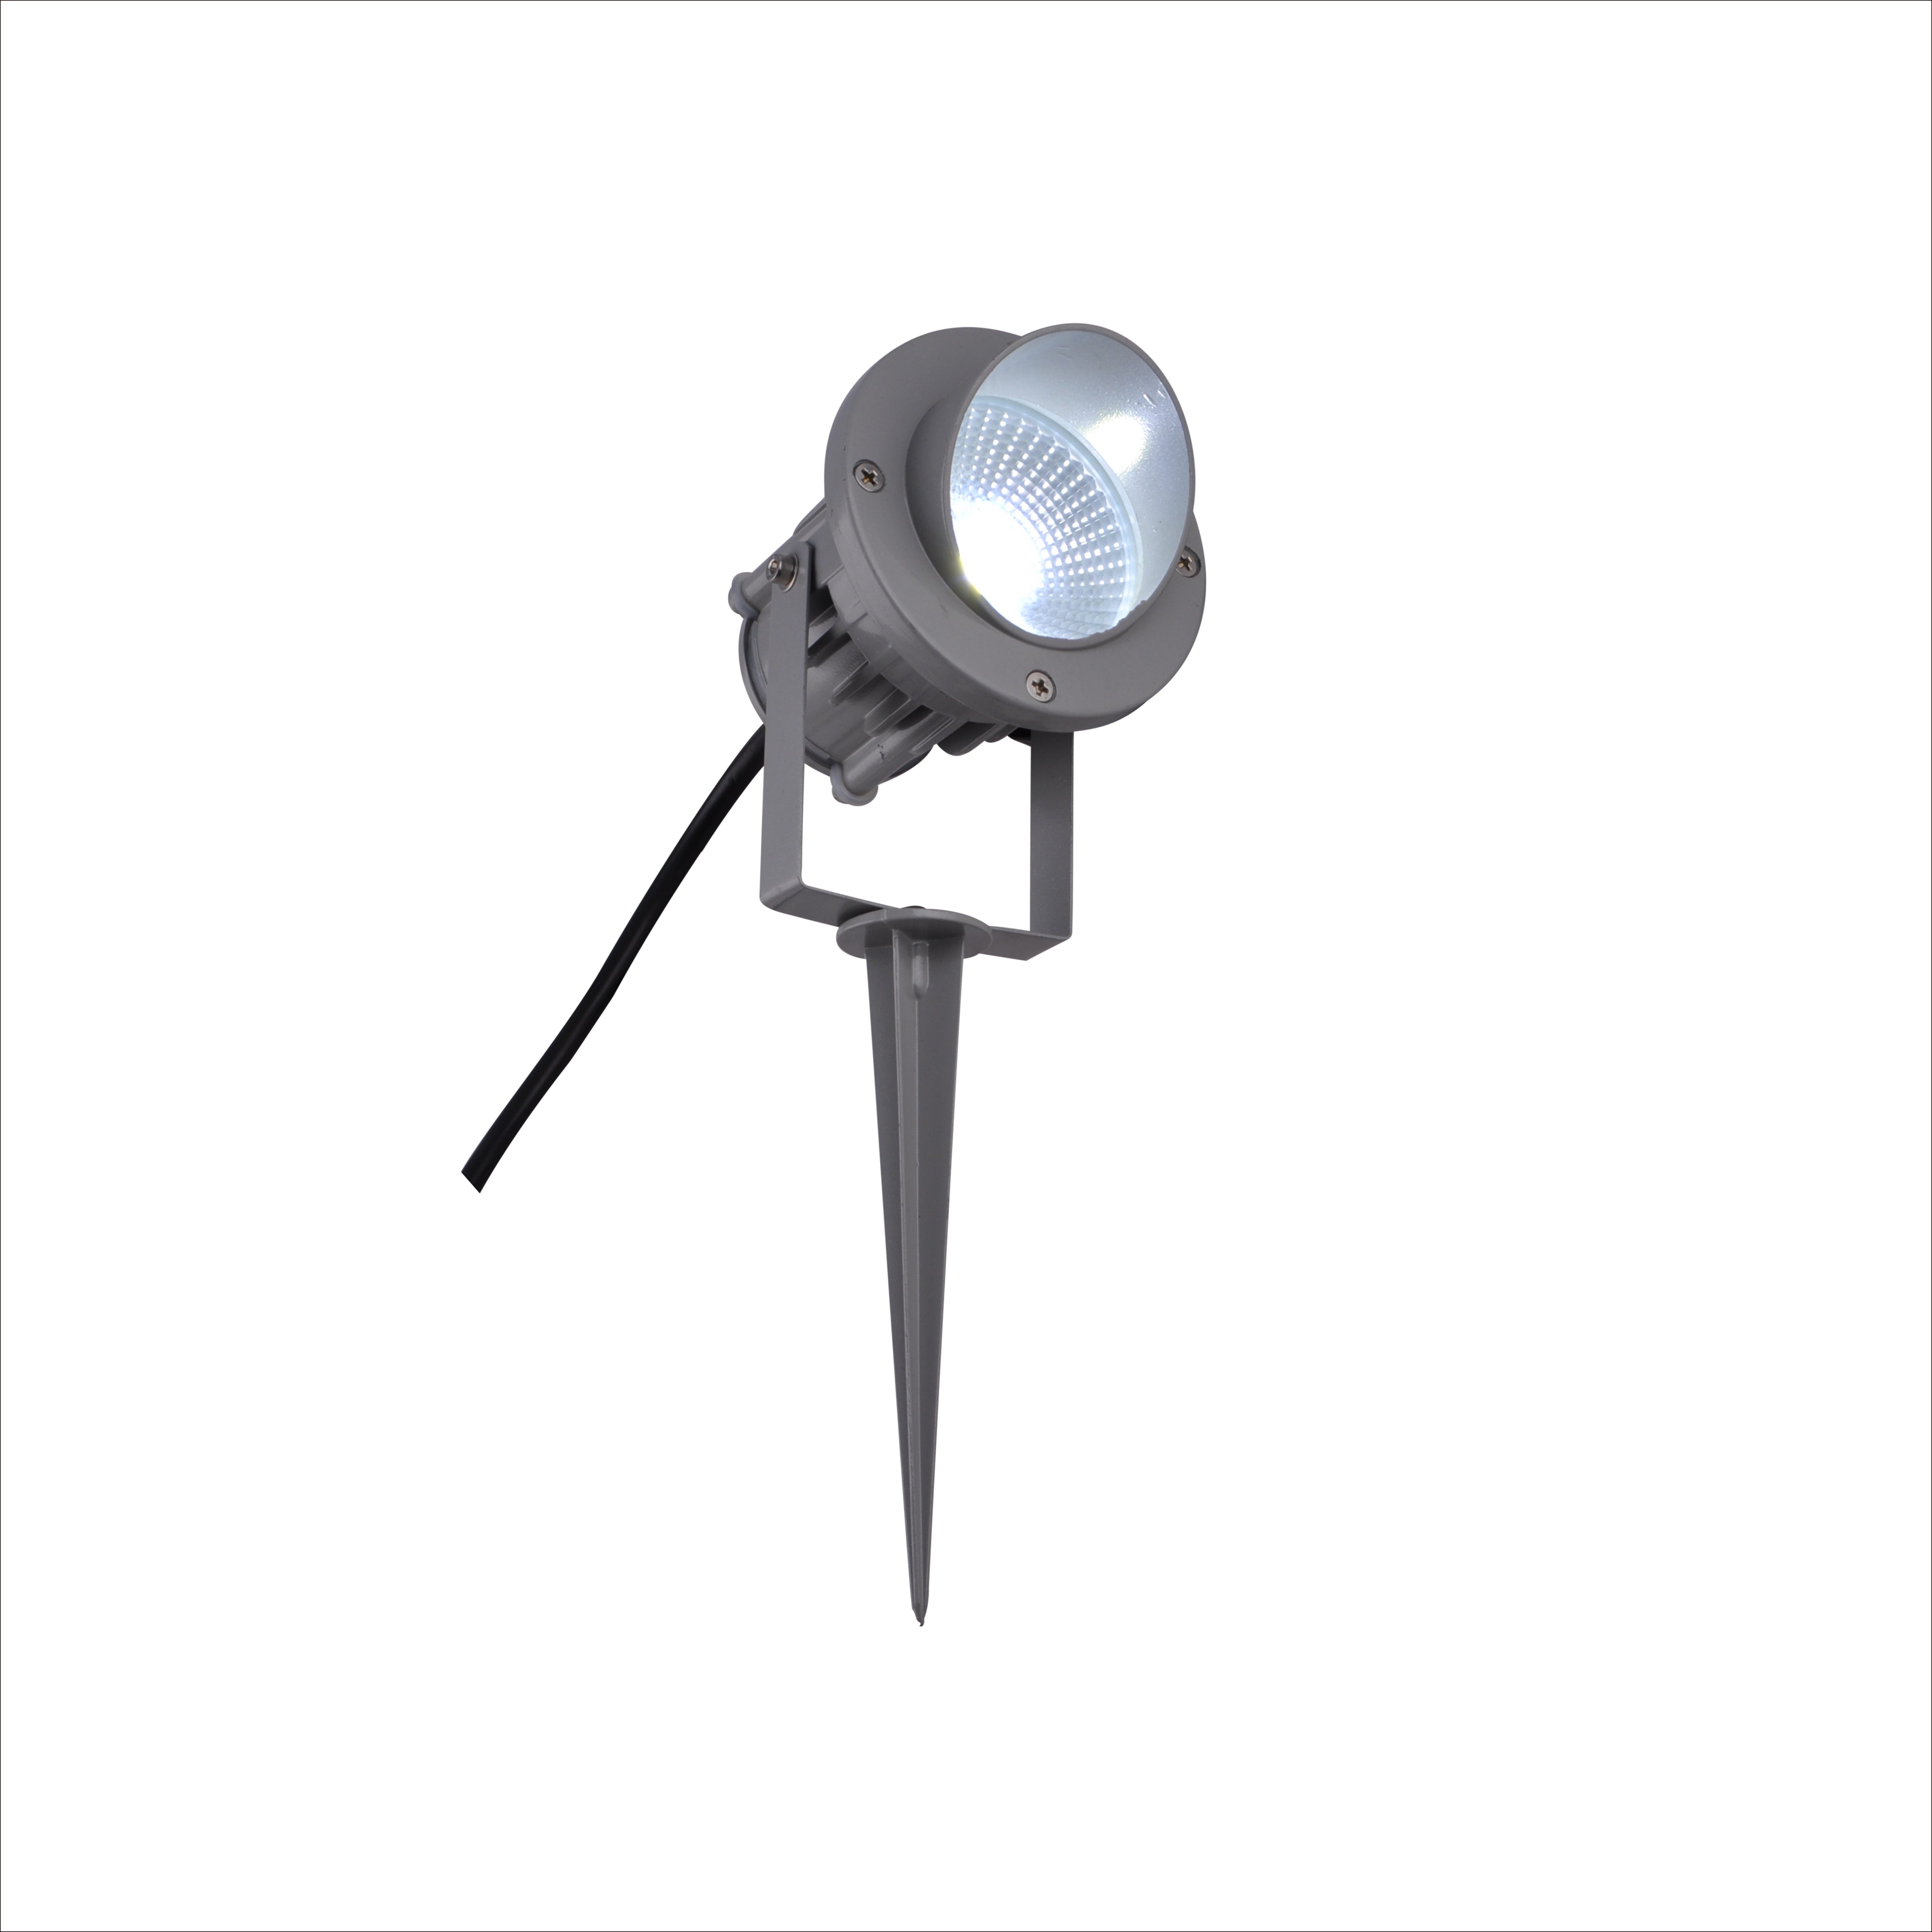 Project-light lamp Φ95xH310mm 7w cob